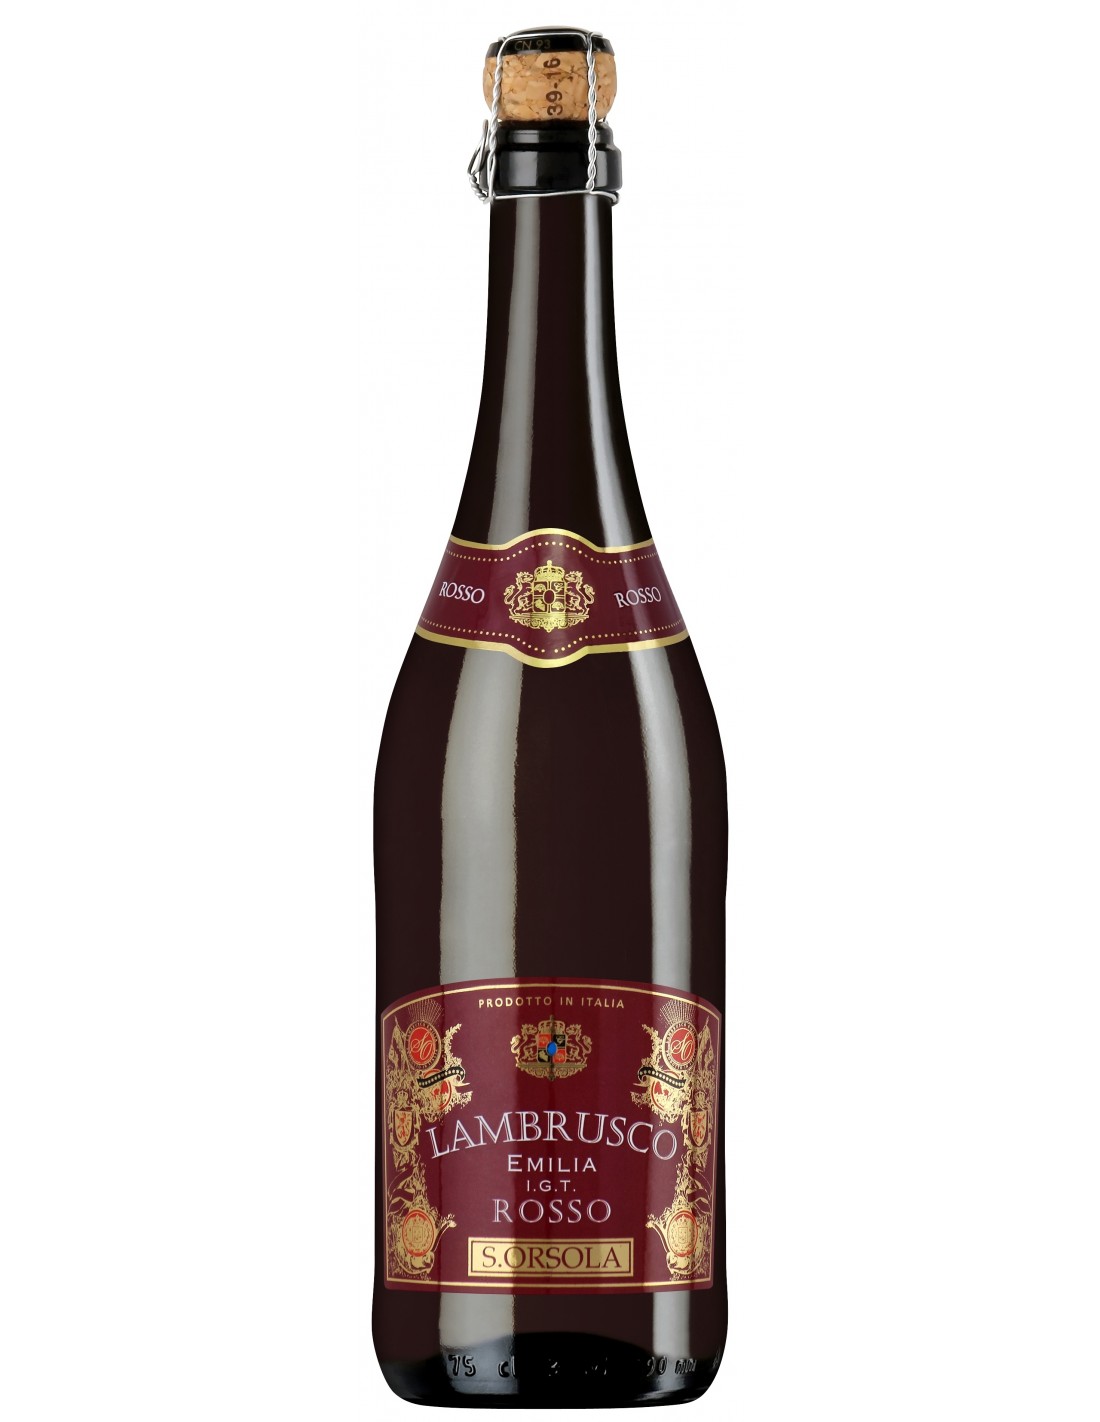 Vin rosu dulce, Lambrusco, Emilia, 0.75L, 7.5% alc., Italia alcooldiscount.ro